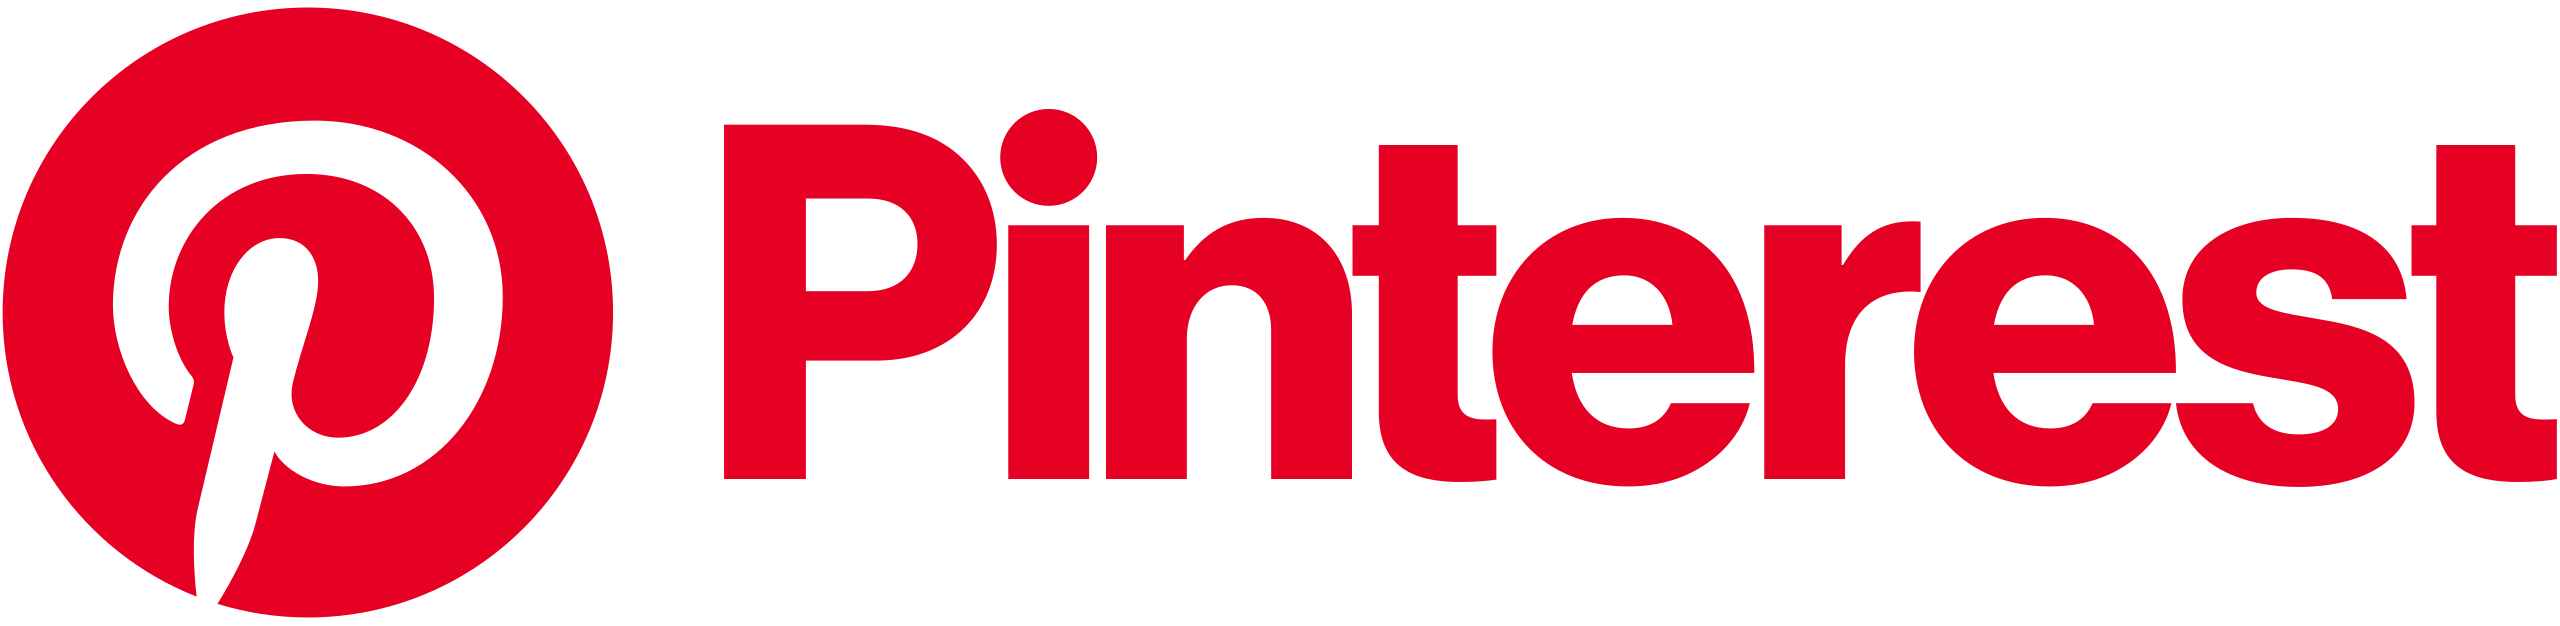 Infolinia Pinterest | Kontakt, telefon, numer, dane kontaktowe